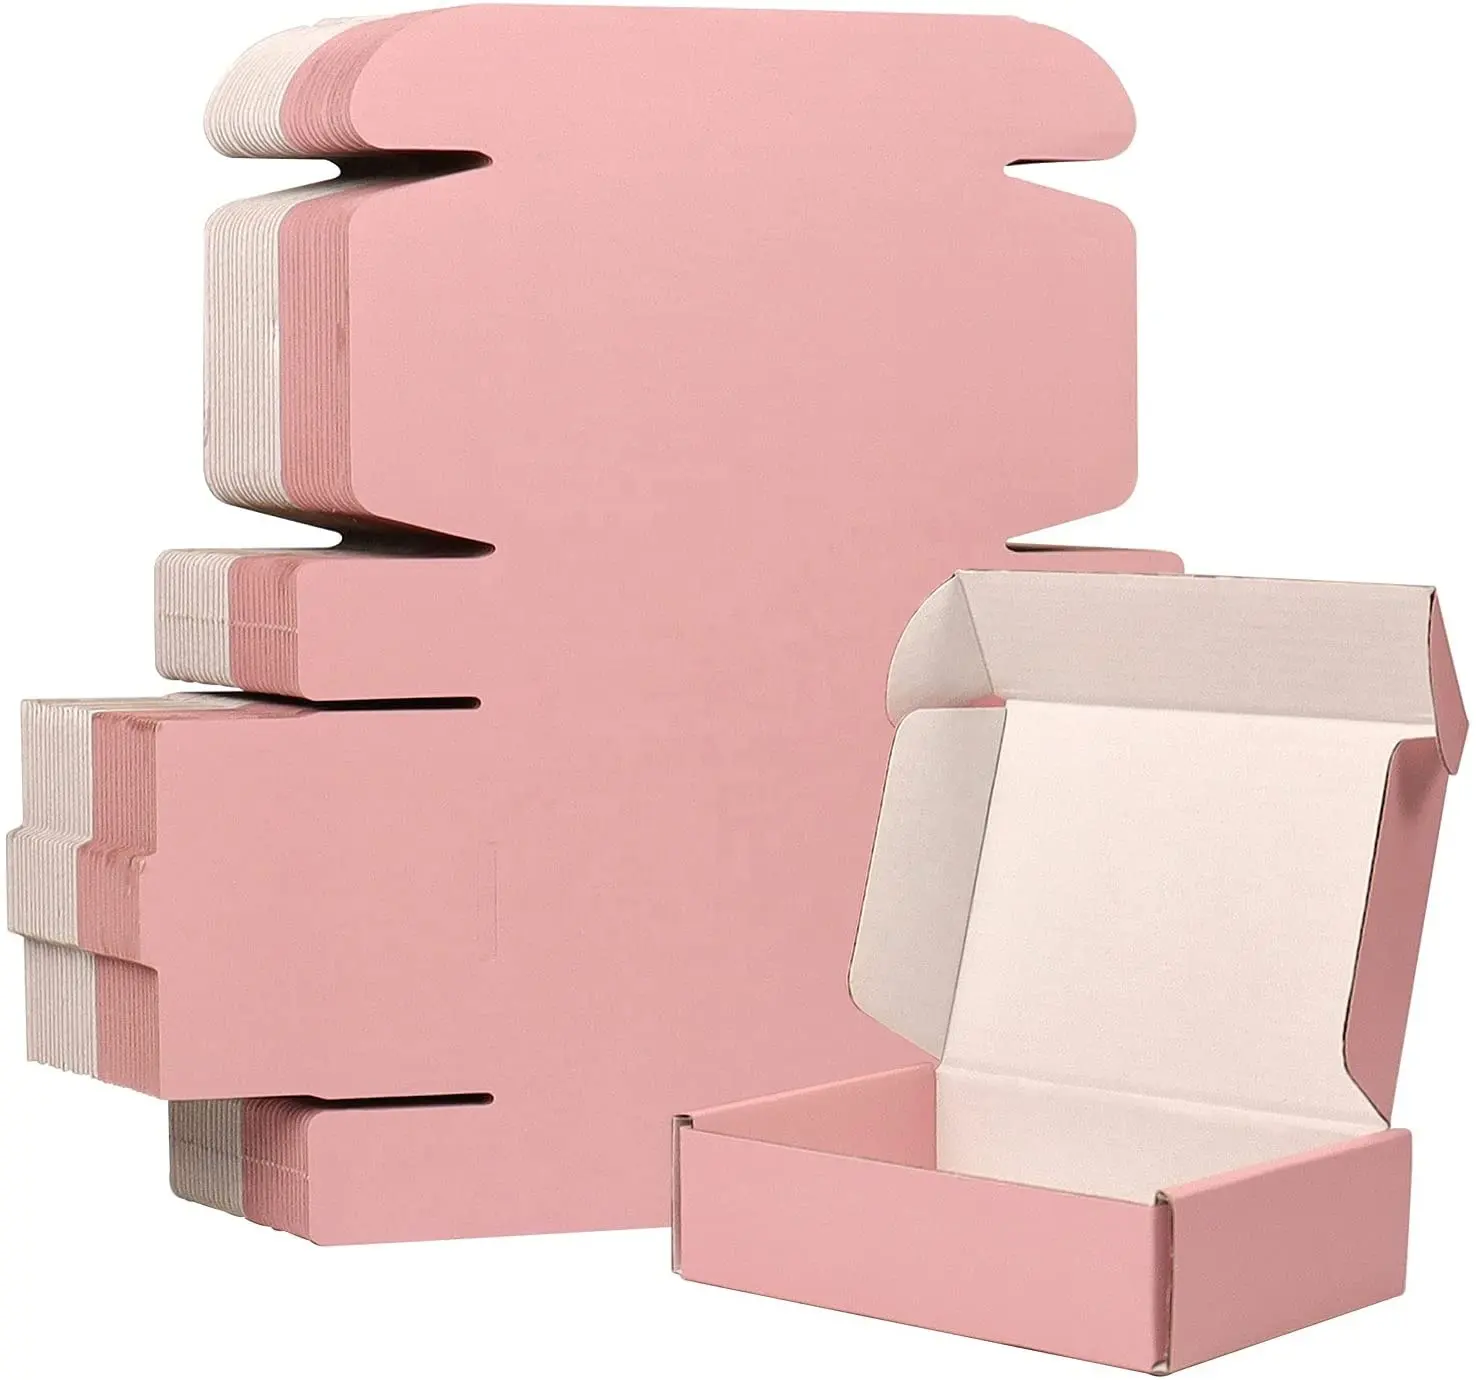 Коробка moonторт нижнее белье премиум фирменная упаковка упаковочная бумажная коробка складная коробка r4i sdhc счастливая коробка для посылки